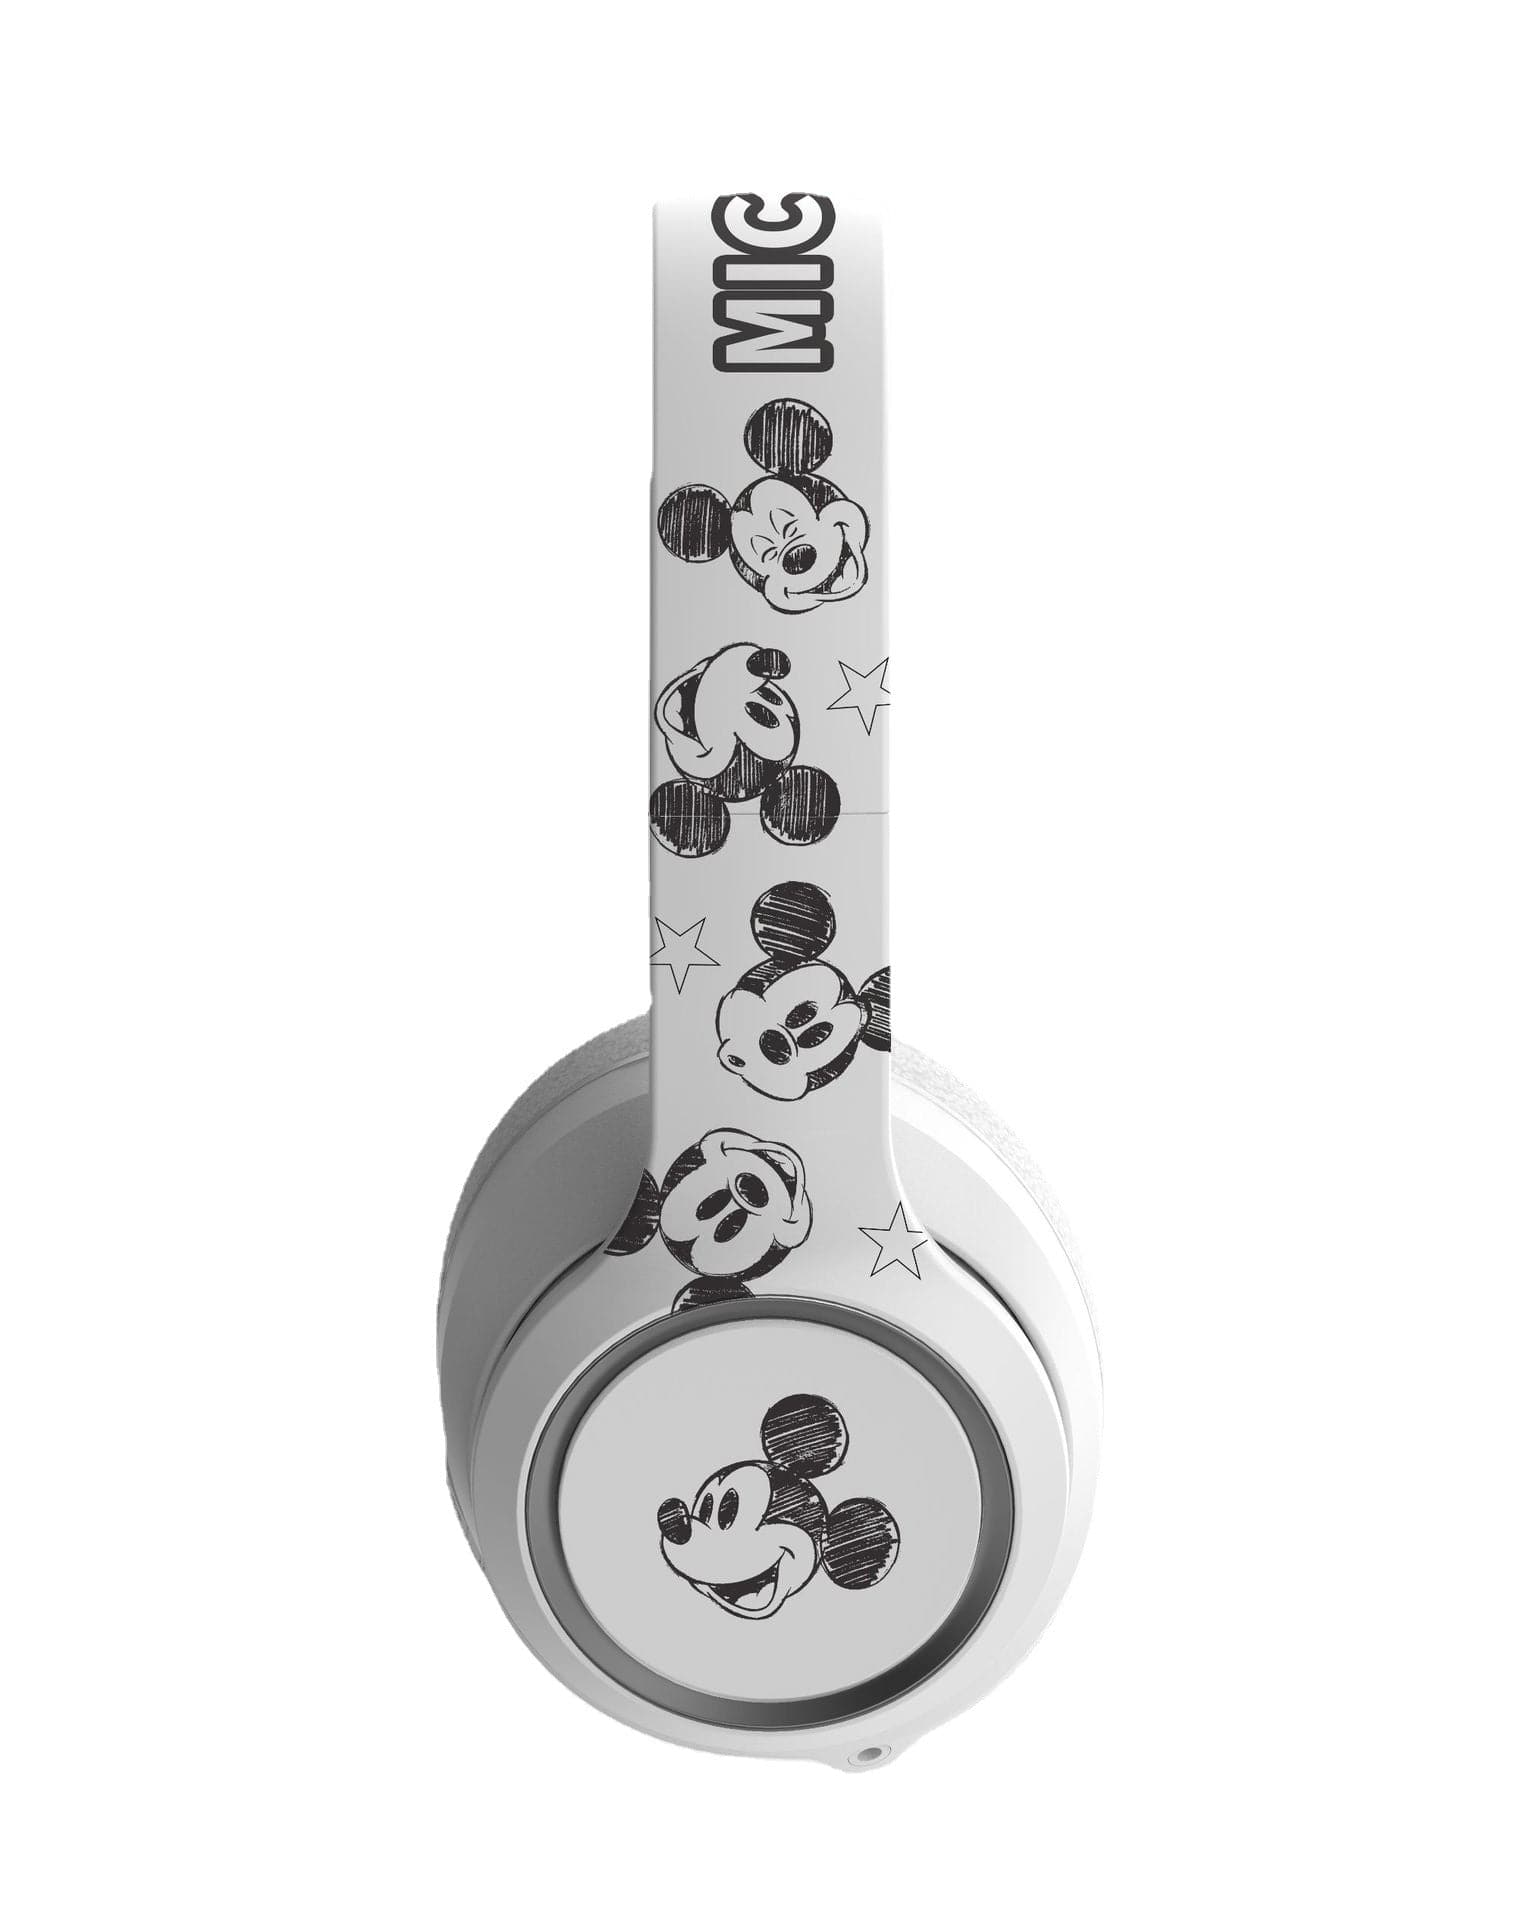 Disney E08  over-ear wireless bluetooth headsets